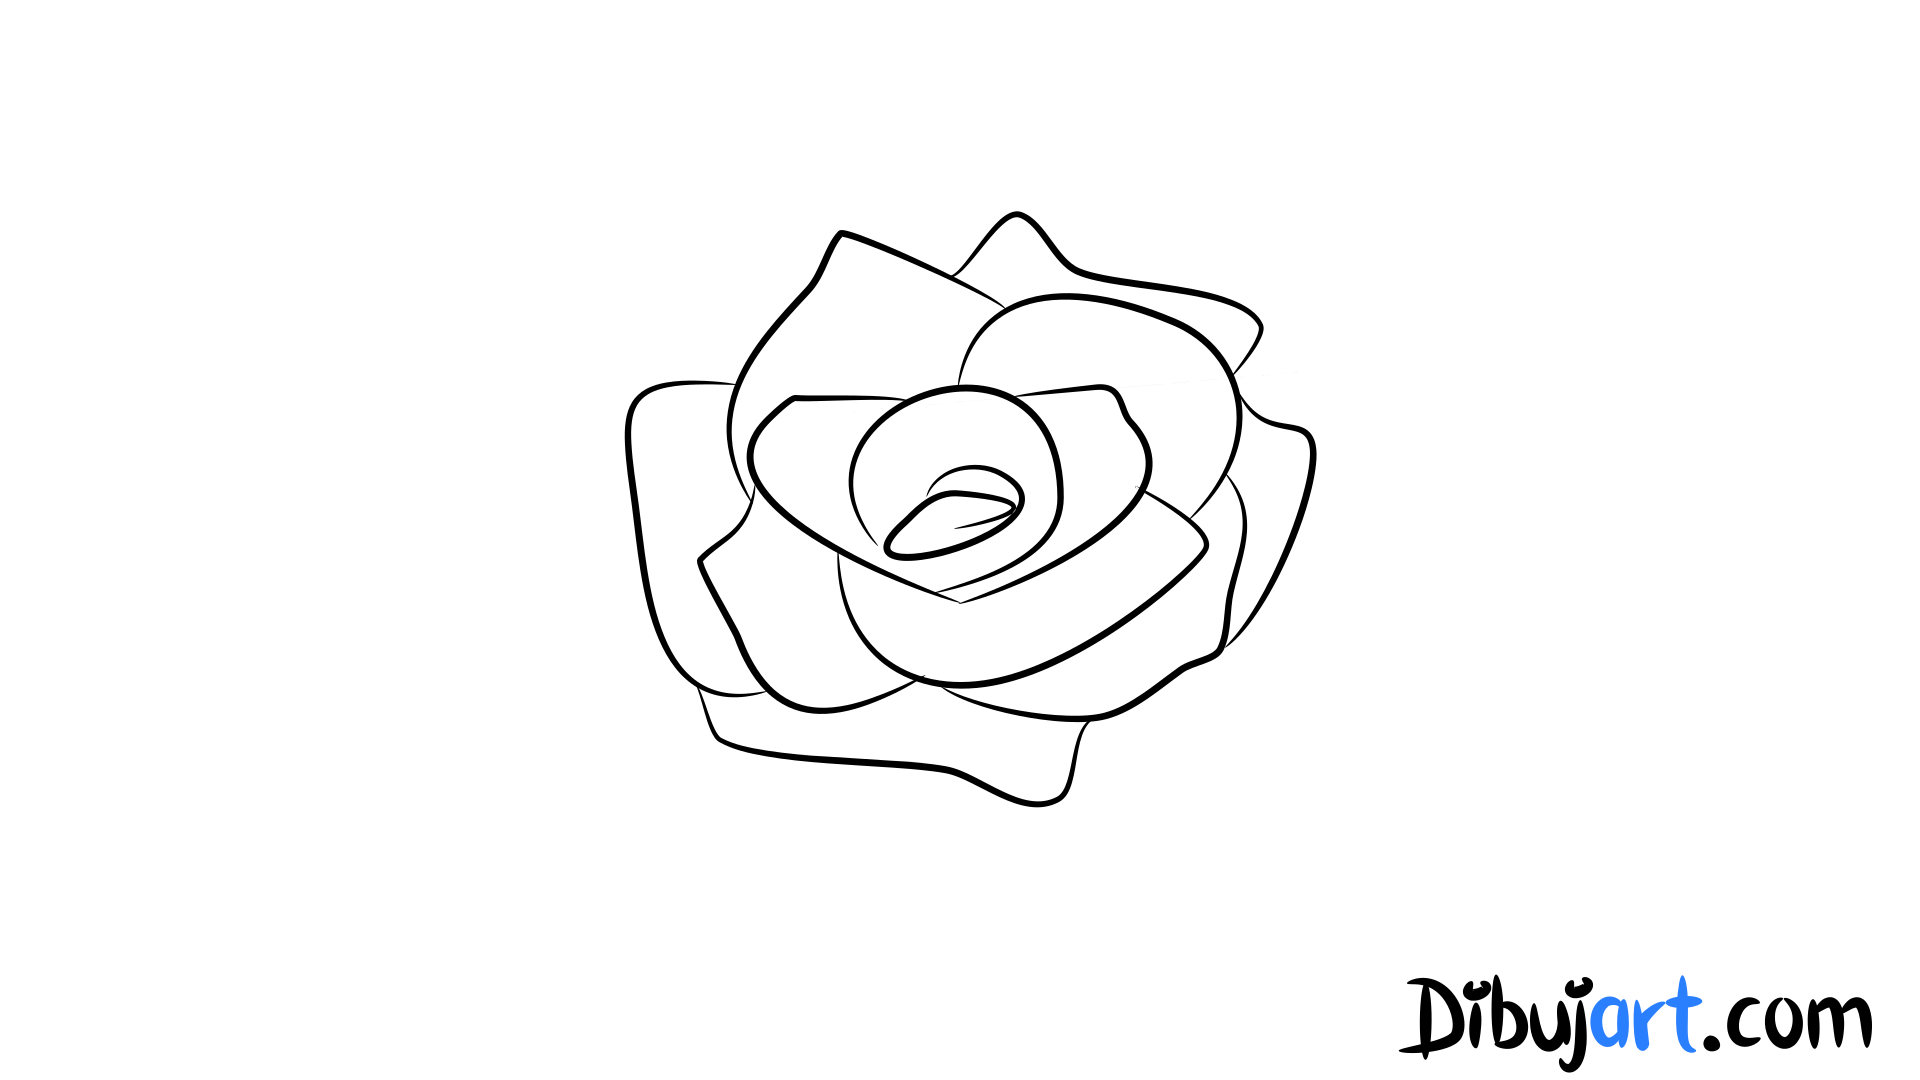 C Mo Dibujar Una Rosa Sencilla Y F Cil Serie De Dibujos De Rosas